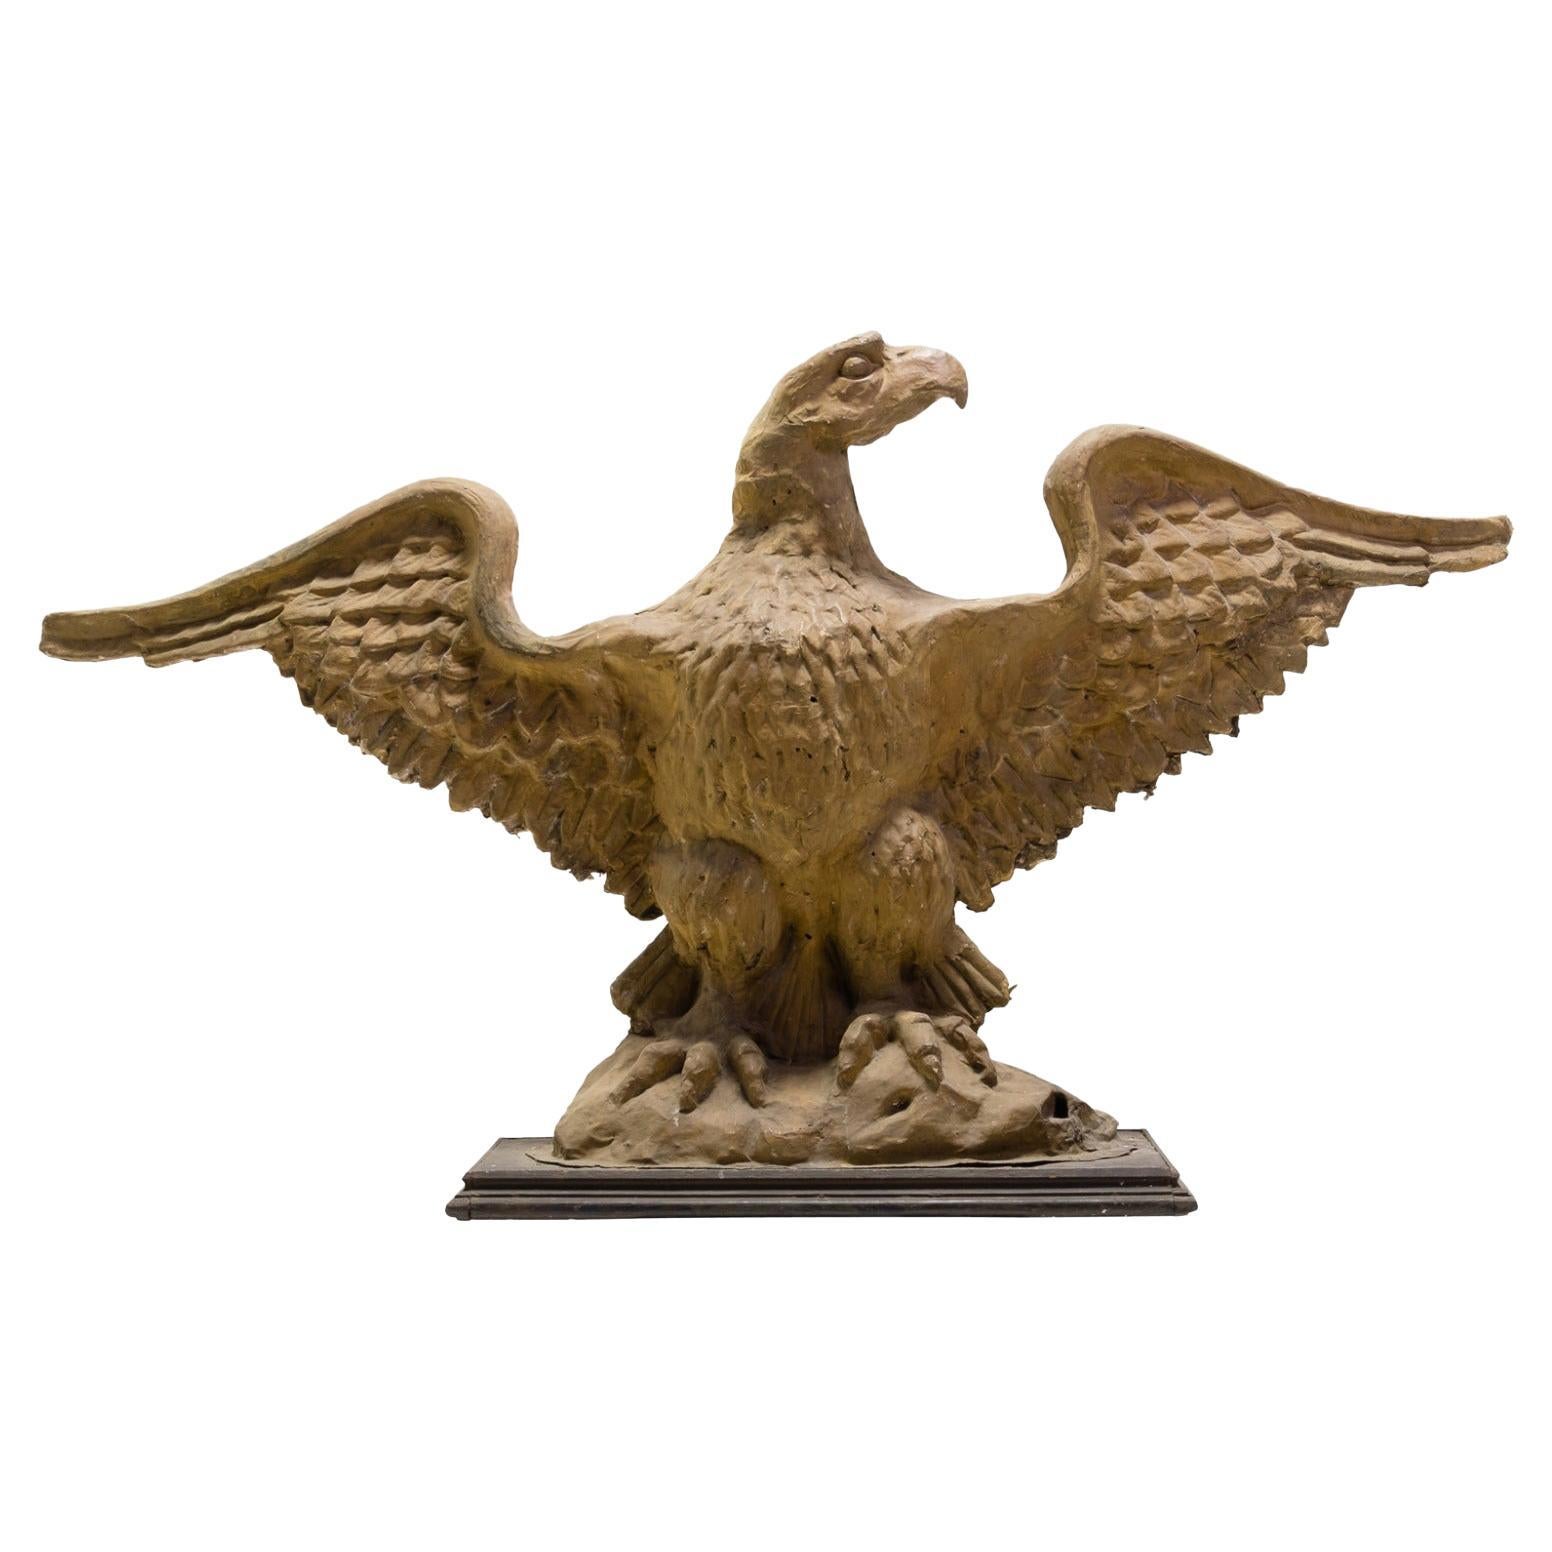 Goldene bemalte Adlerstatue aus dem späten 18. Jahrhundert